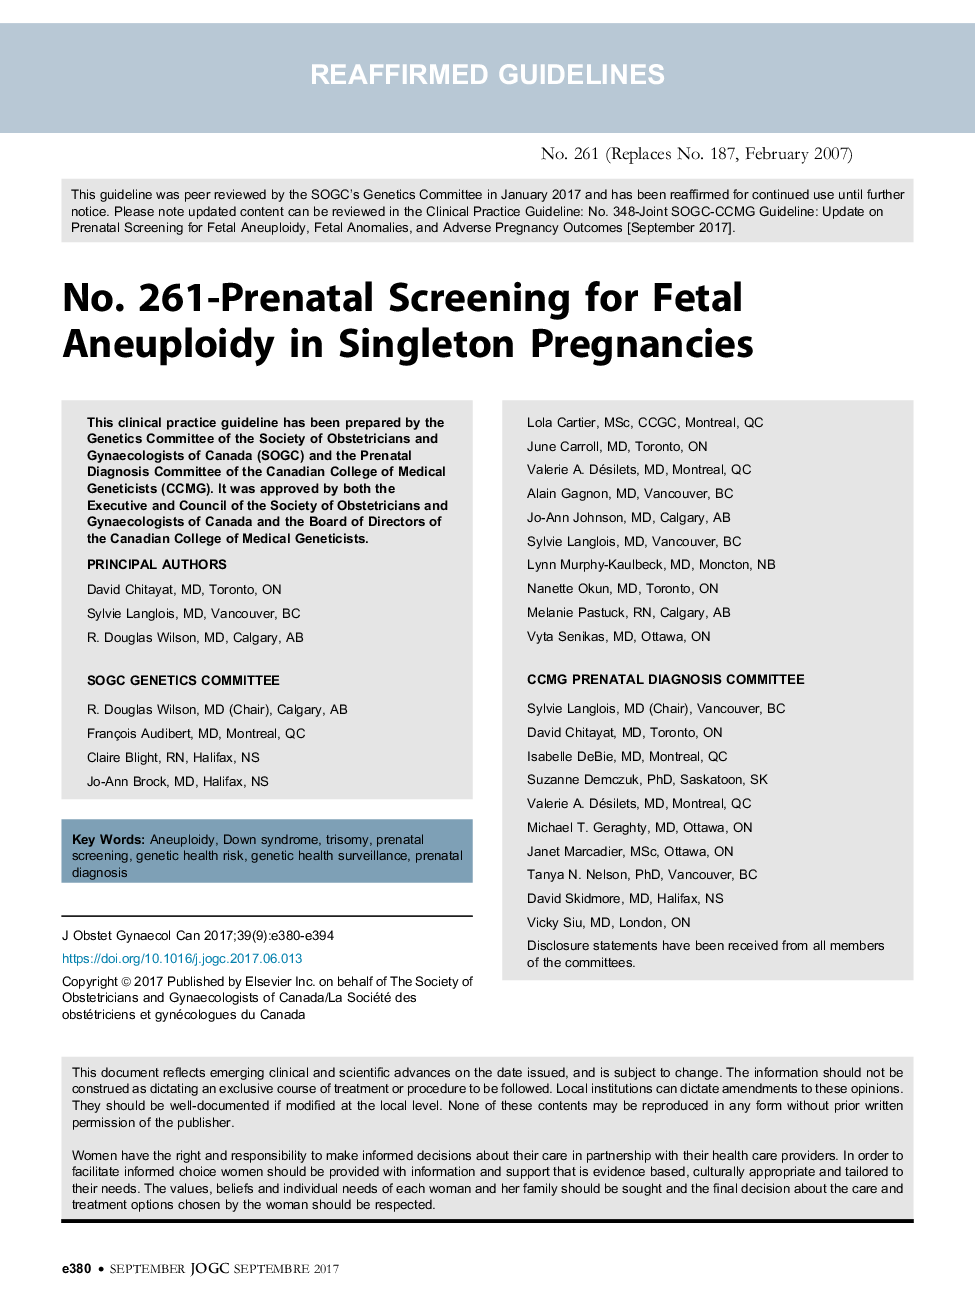 No. 261-Prenatal Screening for Fetal Aneuploidy in Singleton Pregnancies